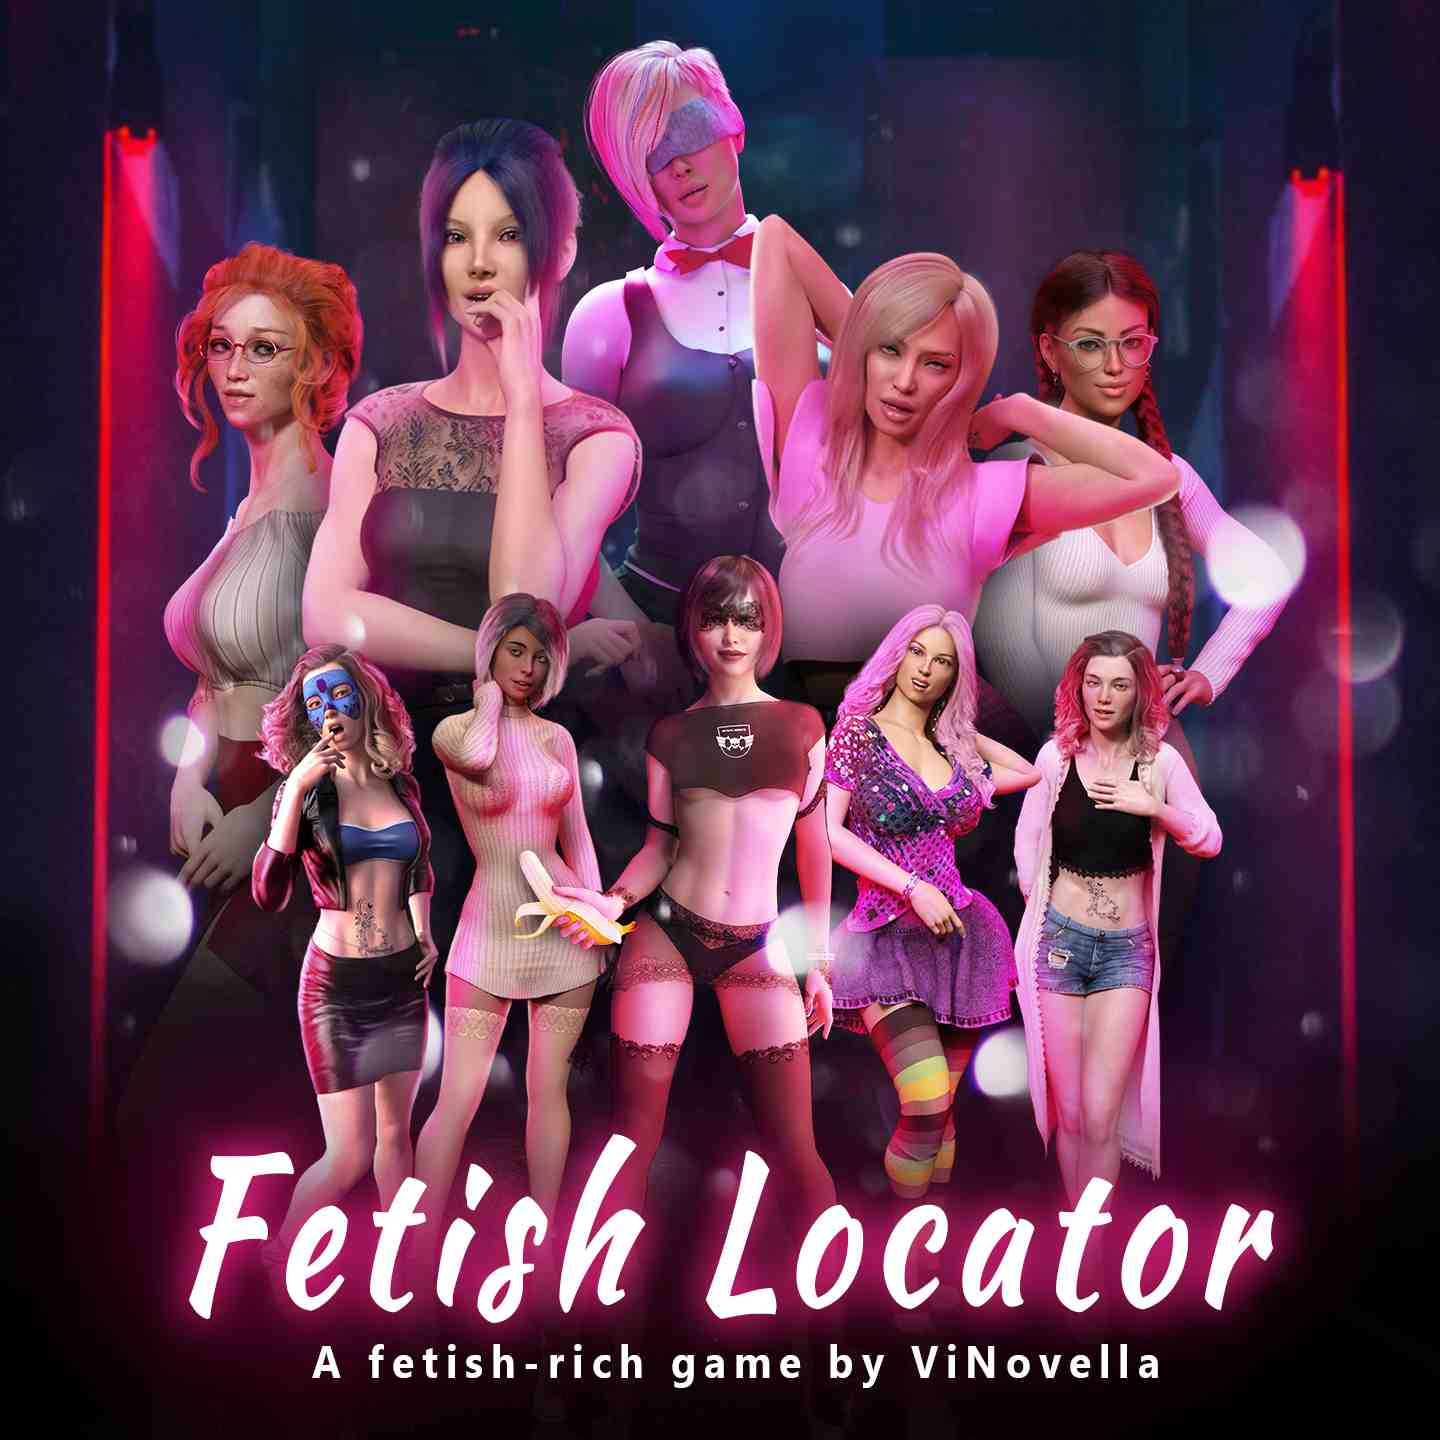 Fetish locator week 3